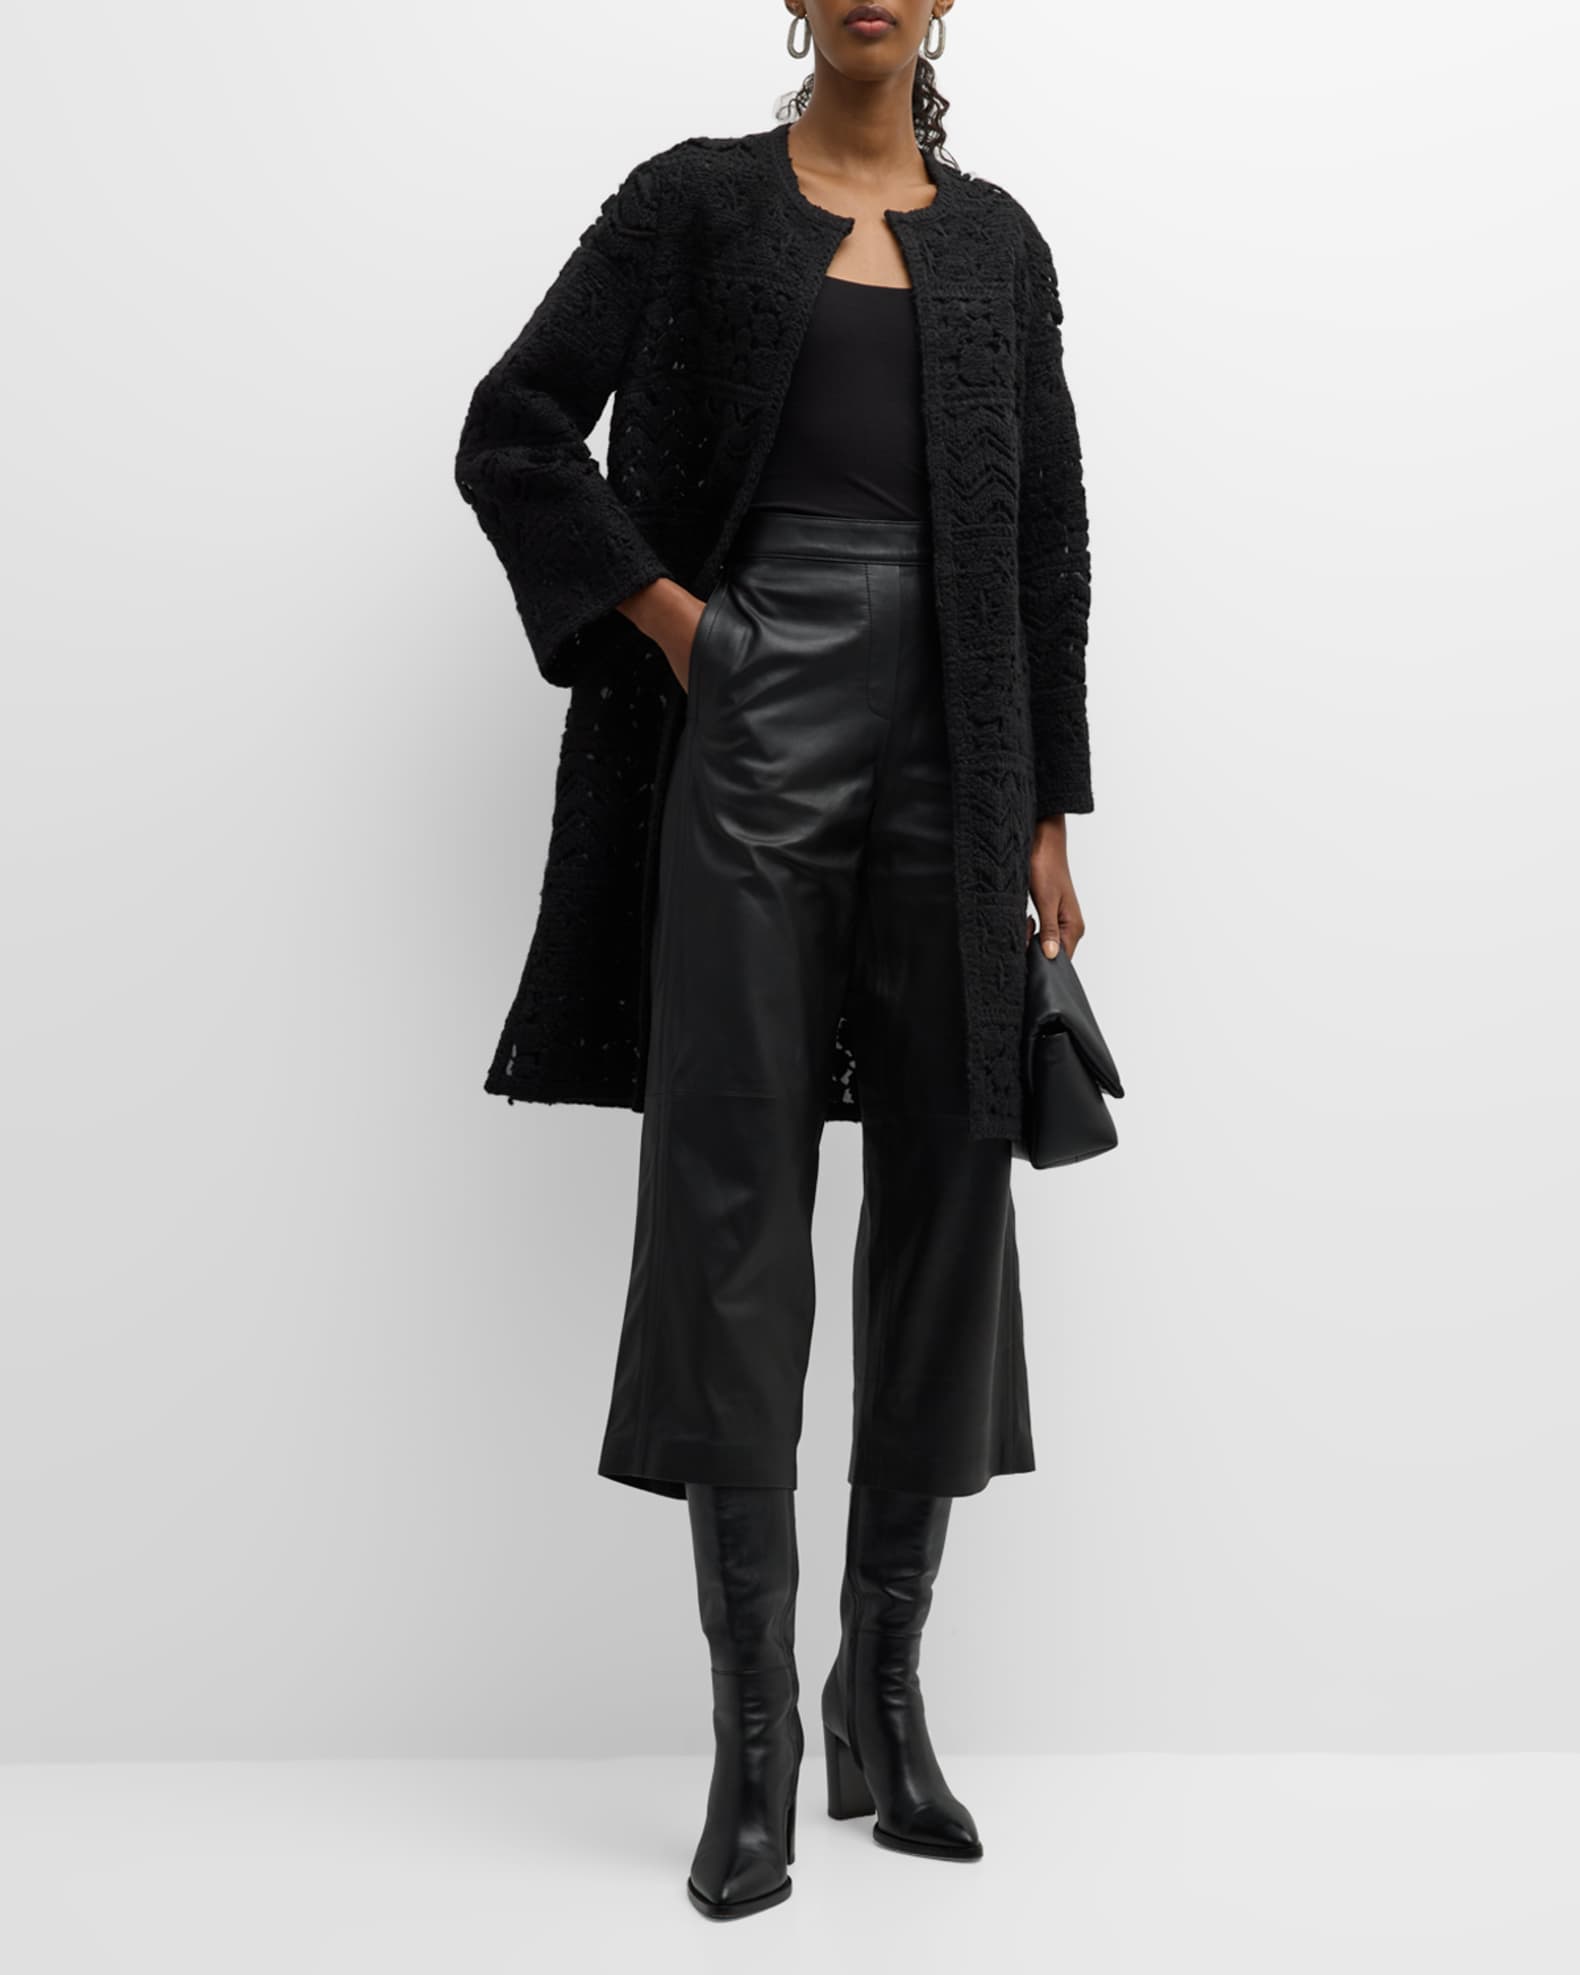 Kobi Halperin Marie Knit Open-Front Coat | Neiman Marcus